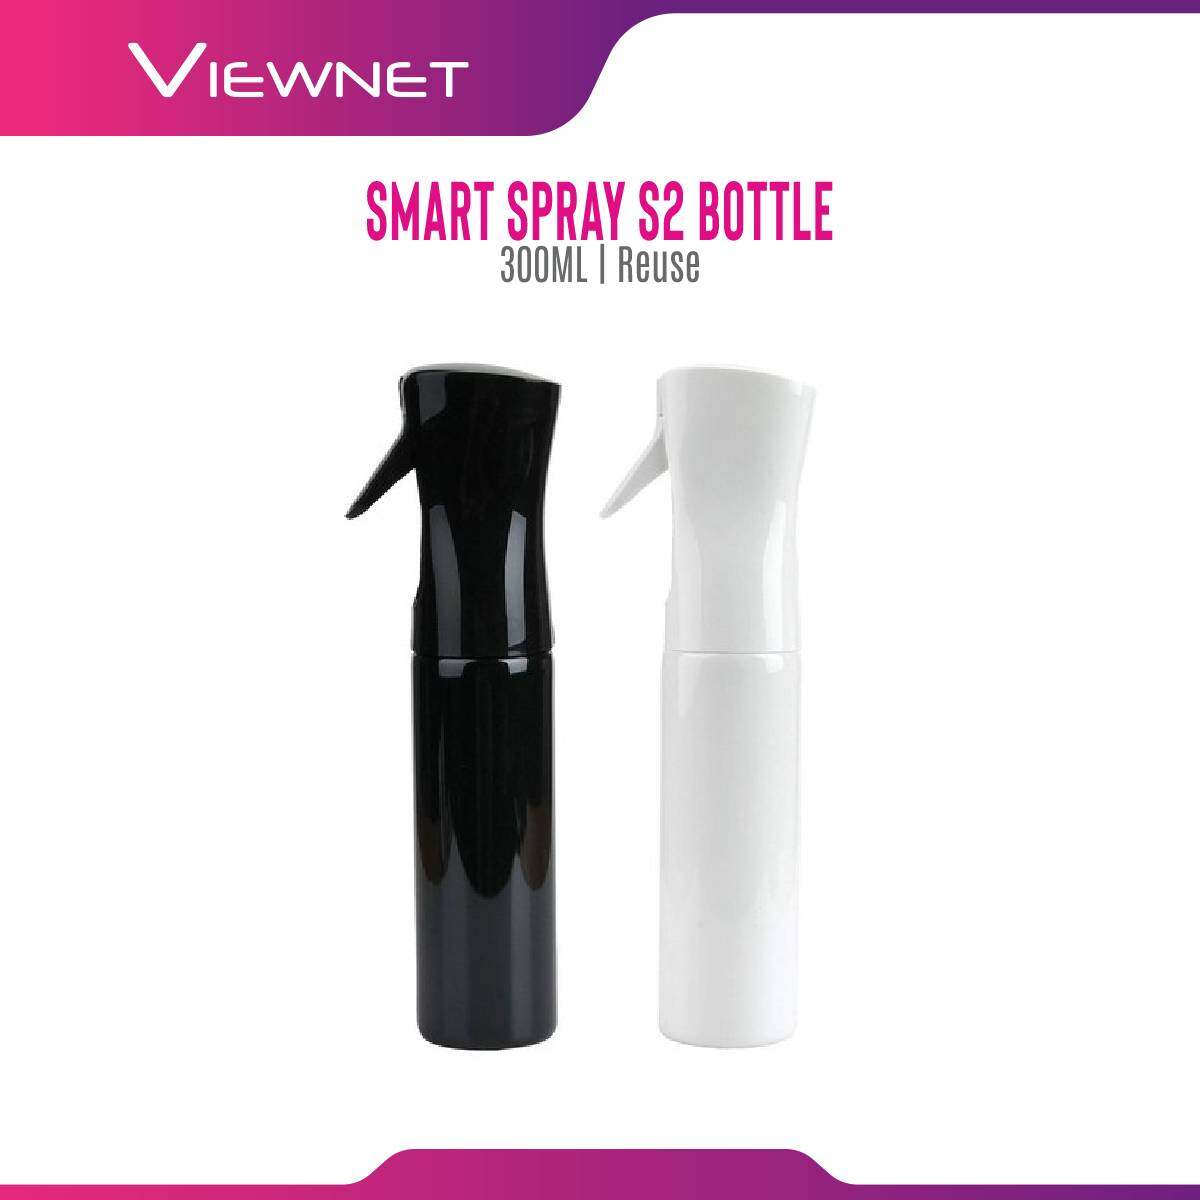 Smart Spray S2 Bottle 300ml